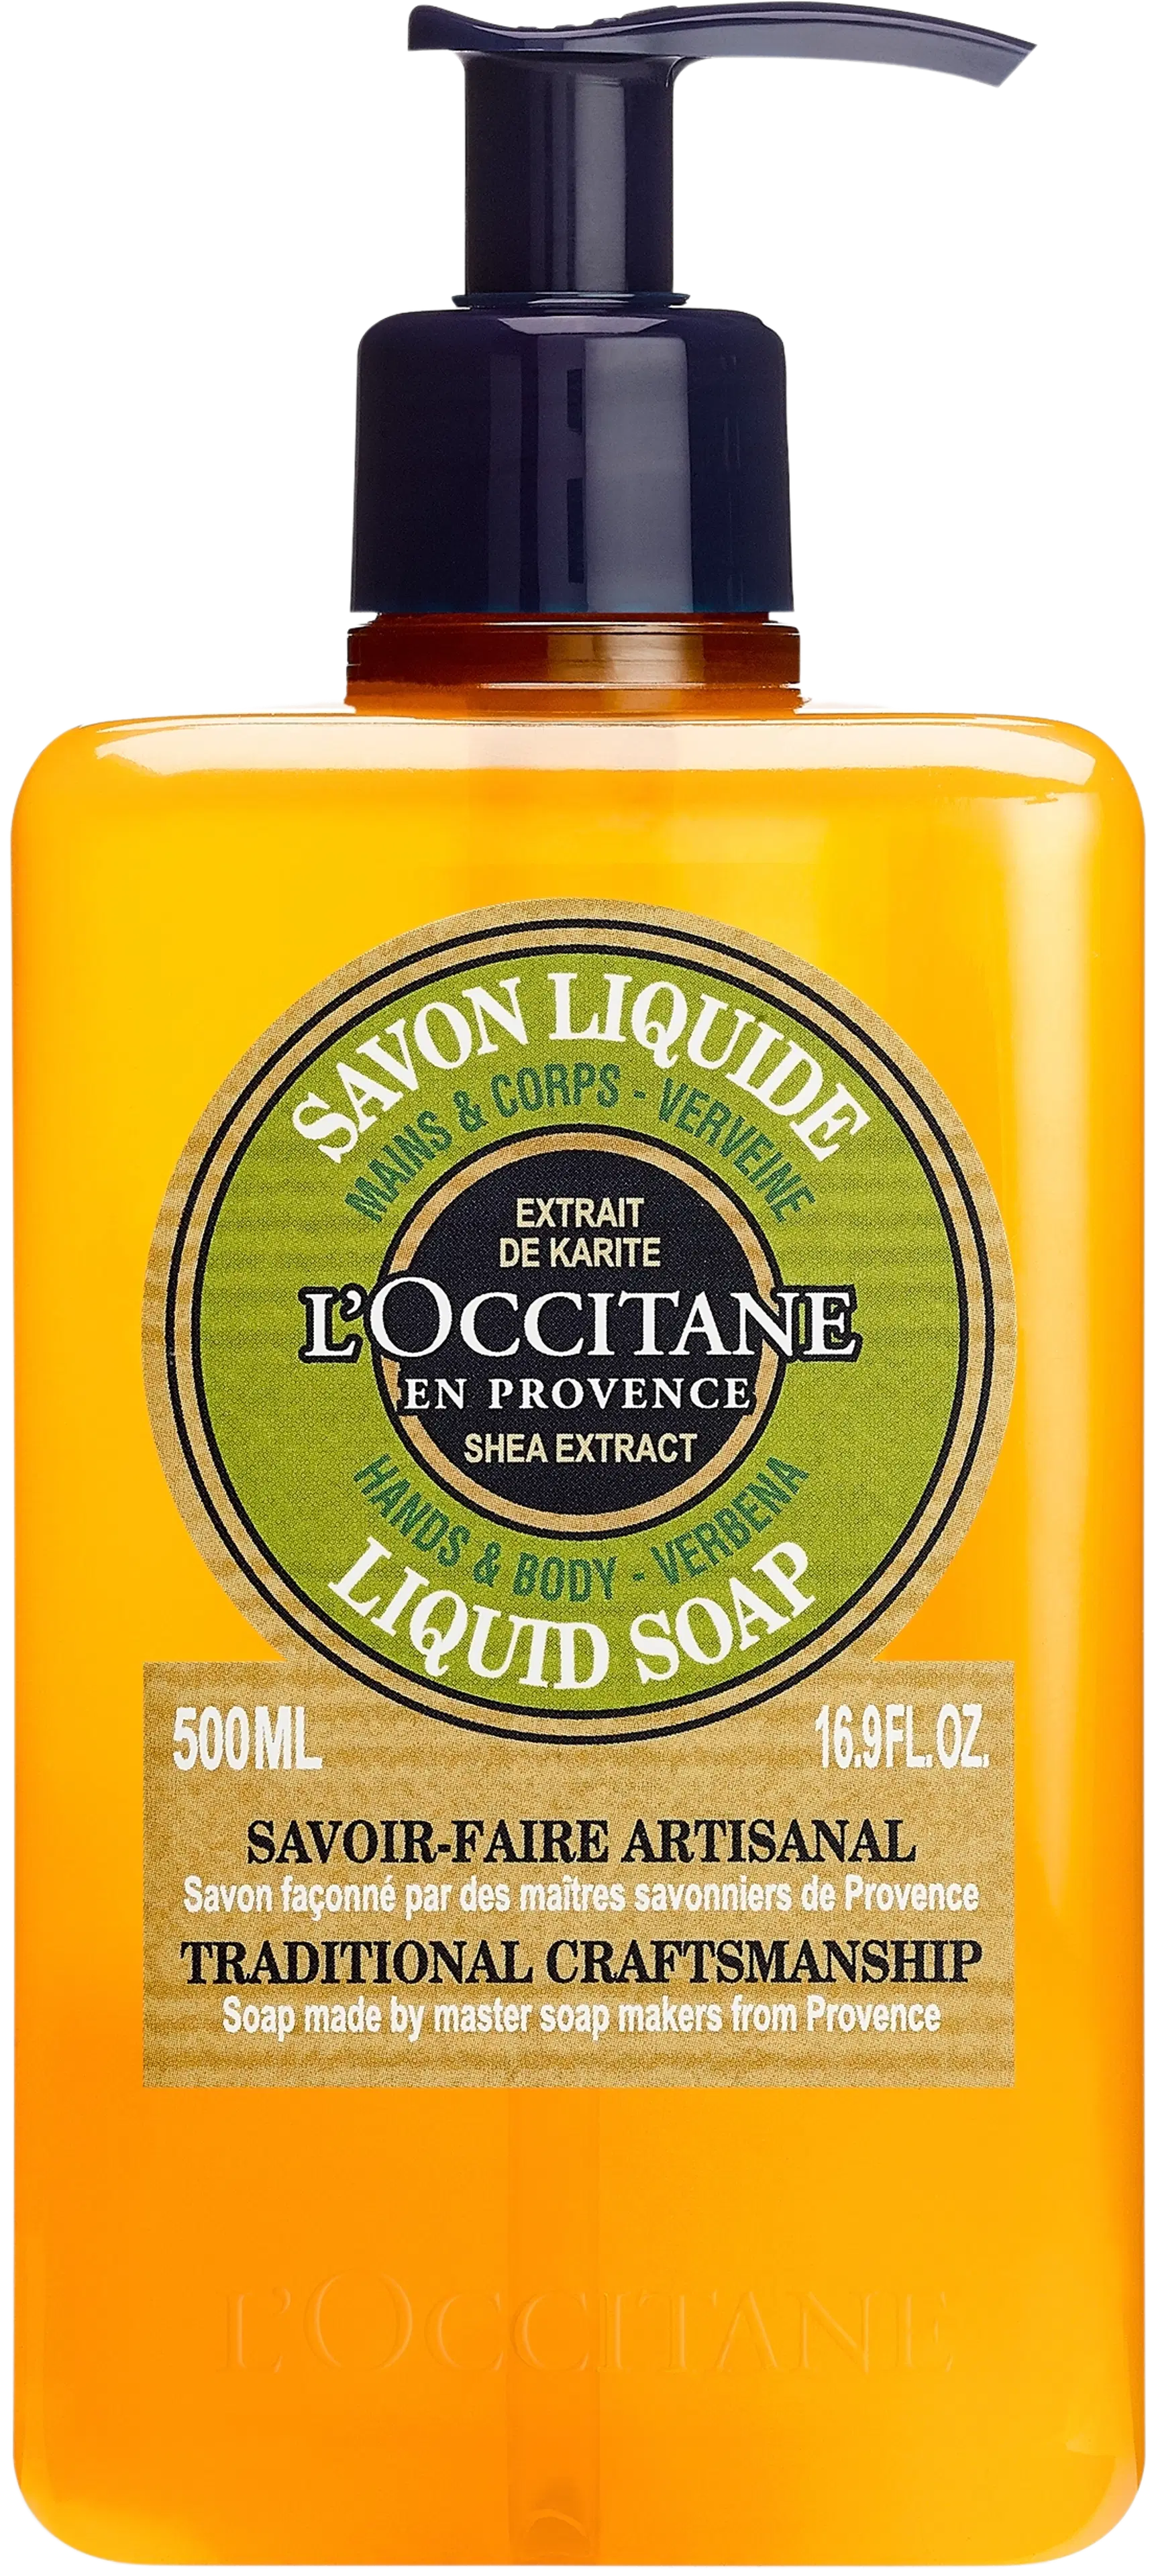 L'Occitane en Provence Shea Verbena Liquid Soap käsisaippua 500 ml